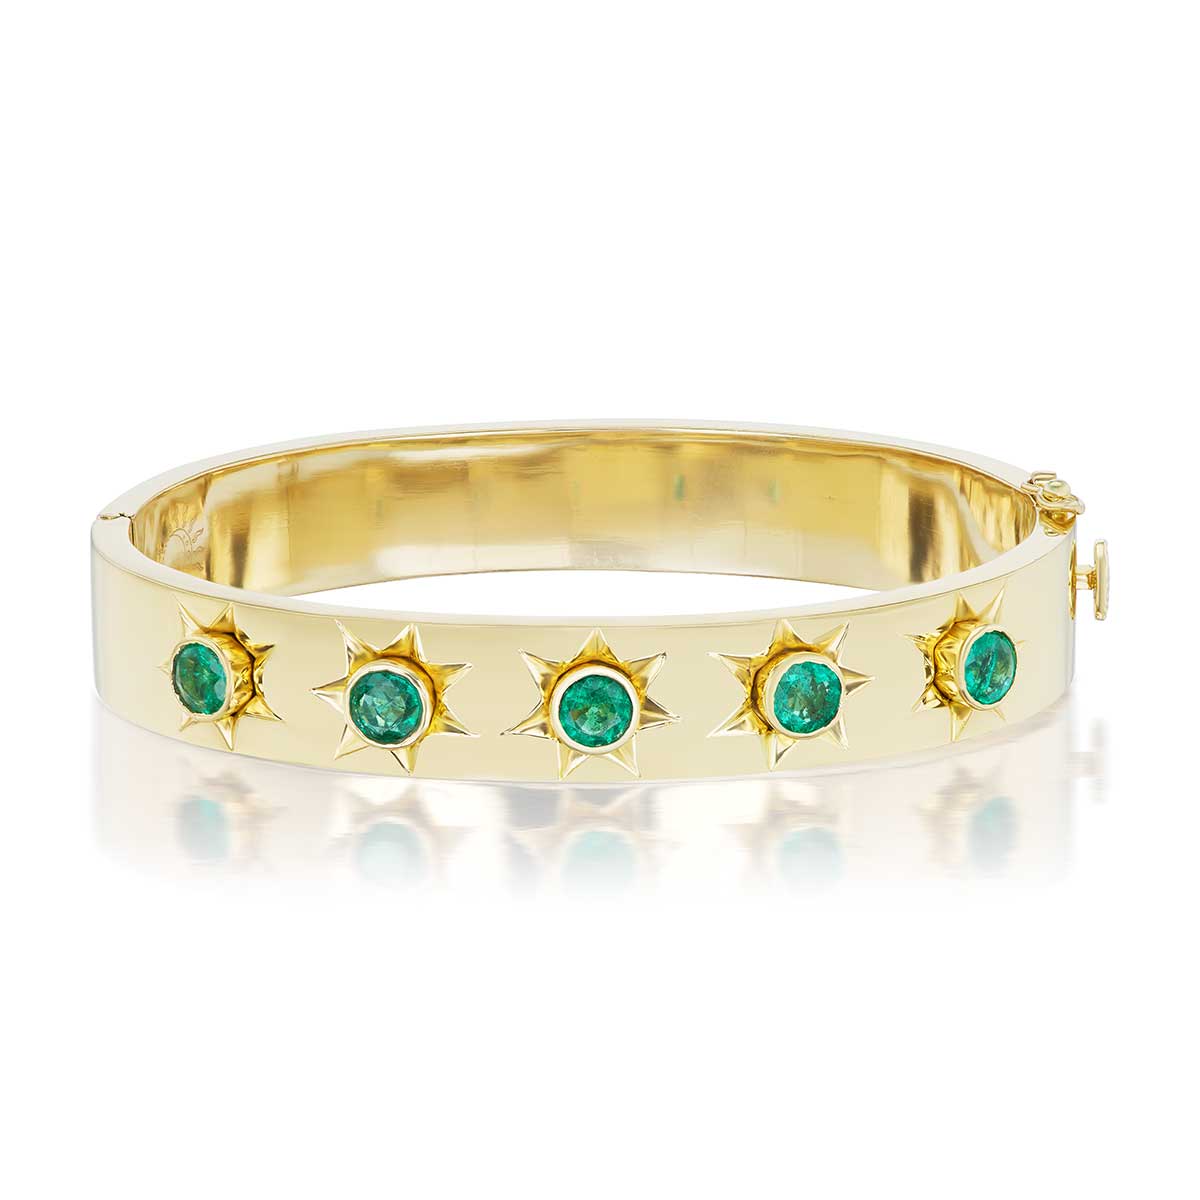 Buy Latest Gold Rings Online 2018 | gold rings for wedding | kalyan